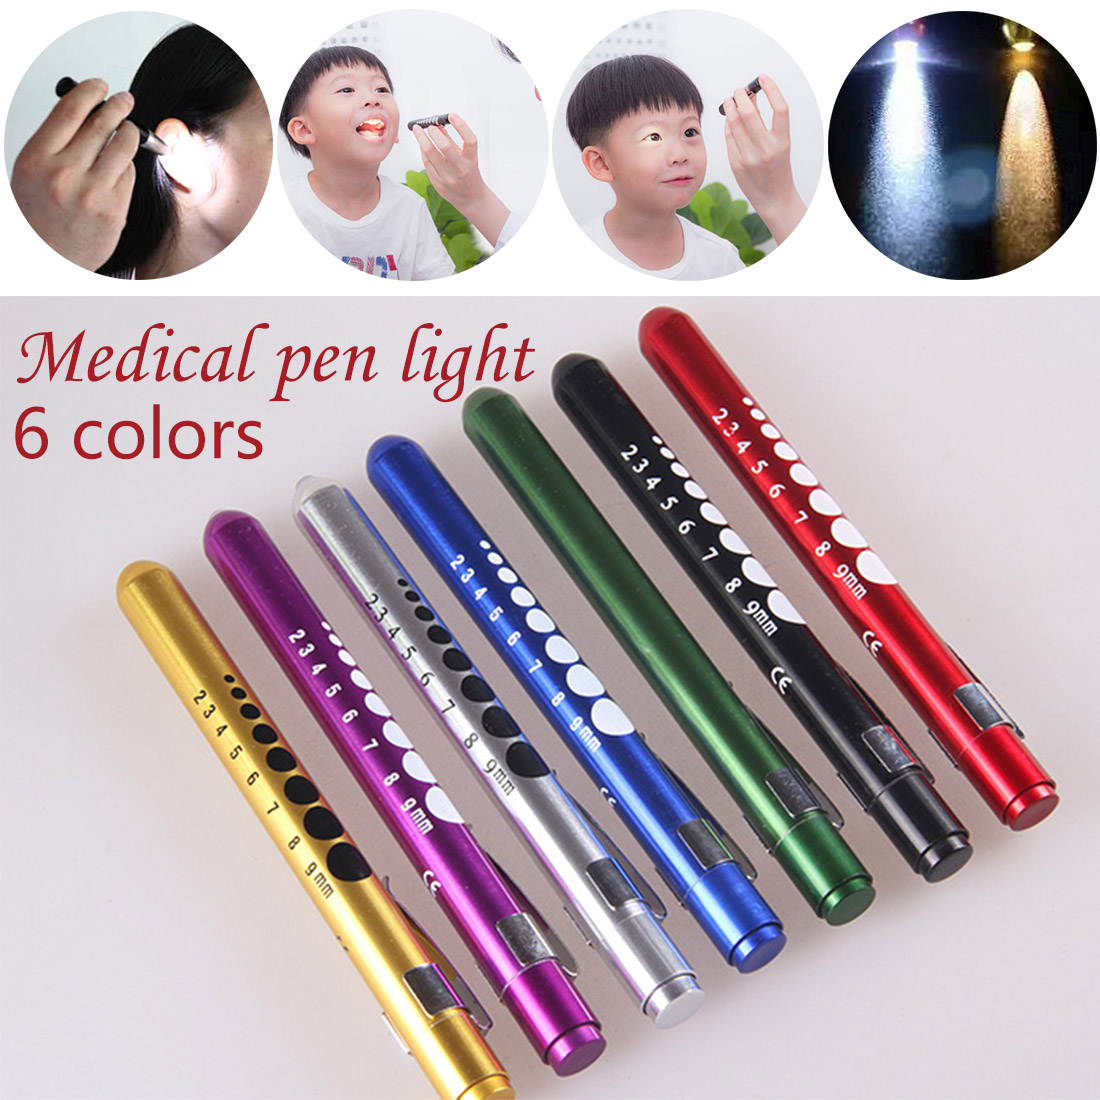 Work Light Beam Penlight Pen Light Pocket Torch Reusable Emergency Yellow Beam Medical Doctor Nurse Pen Light